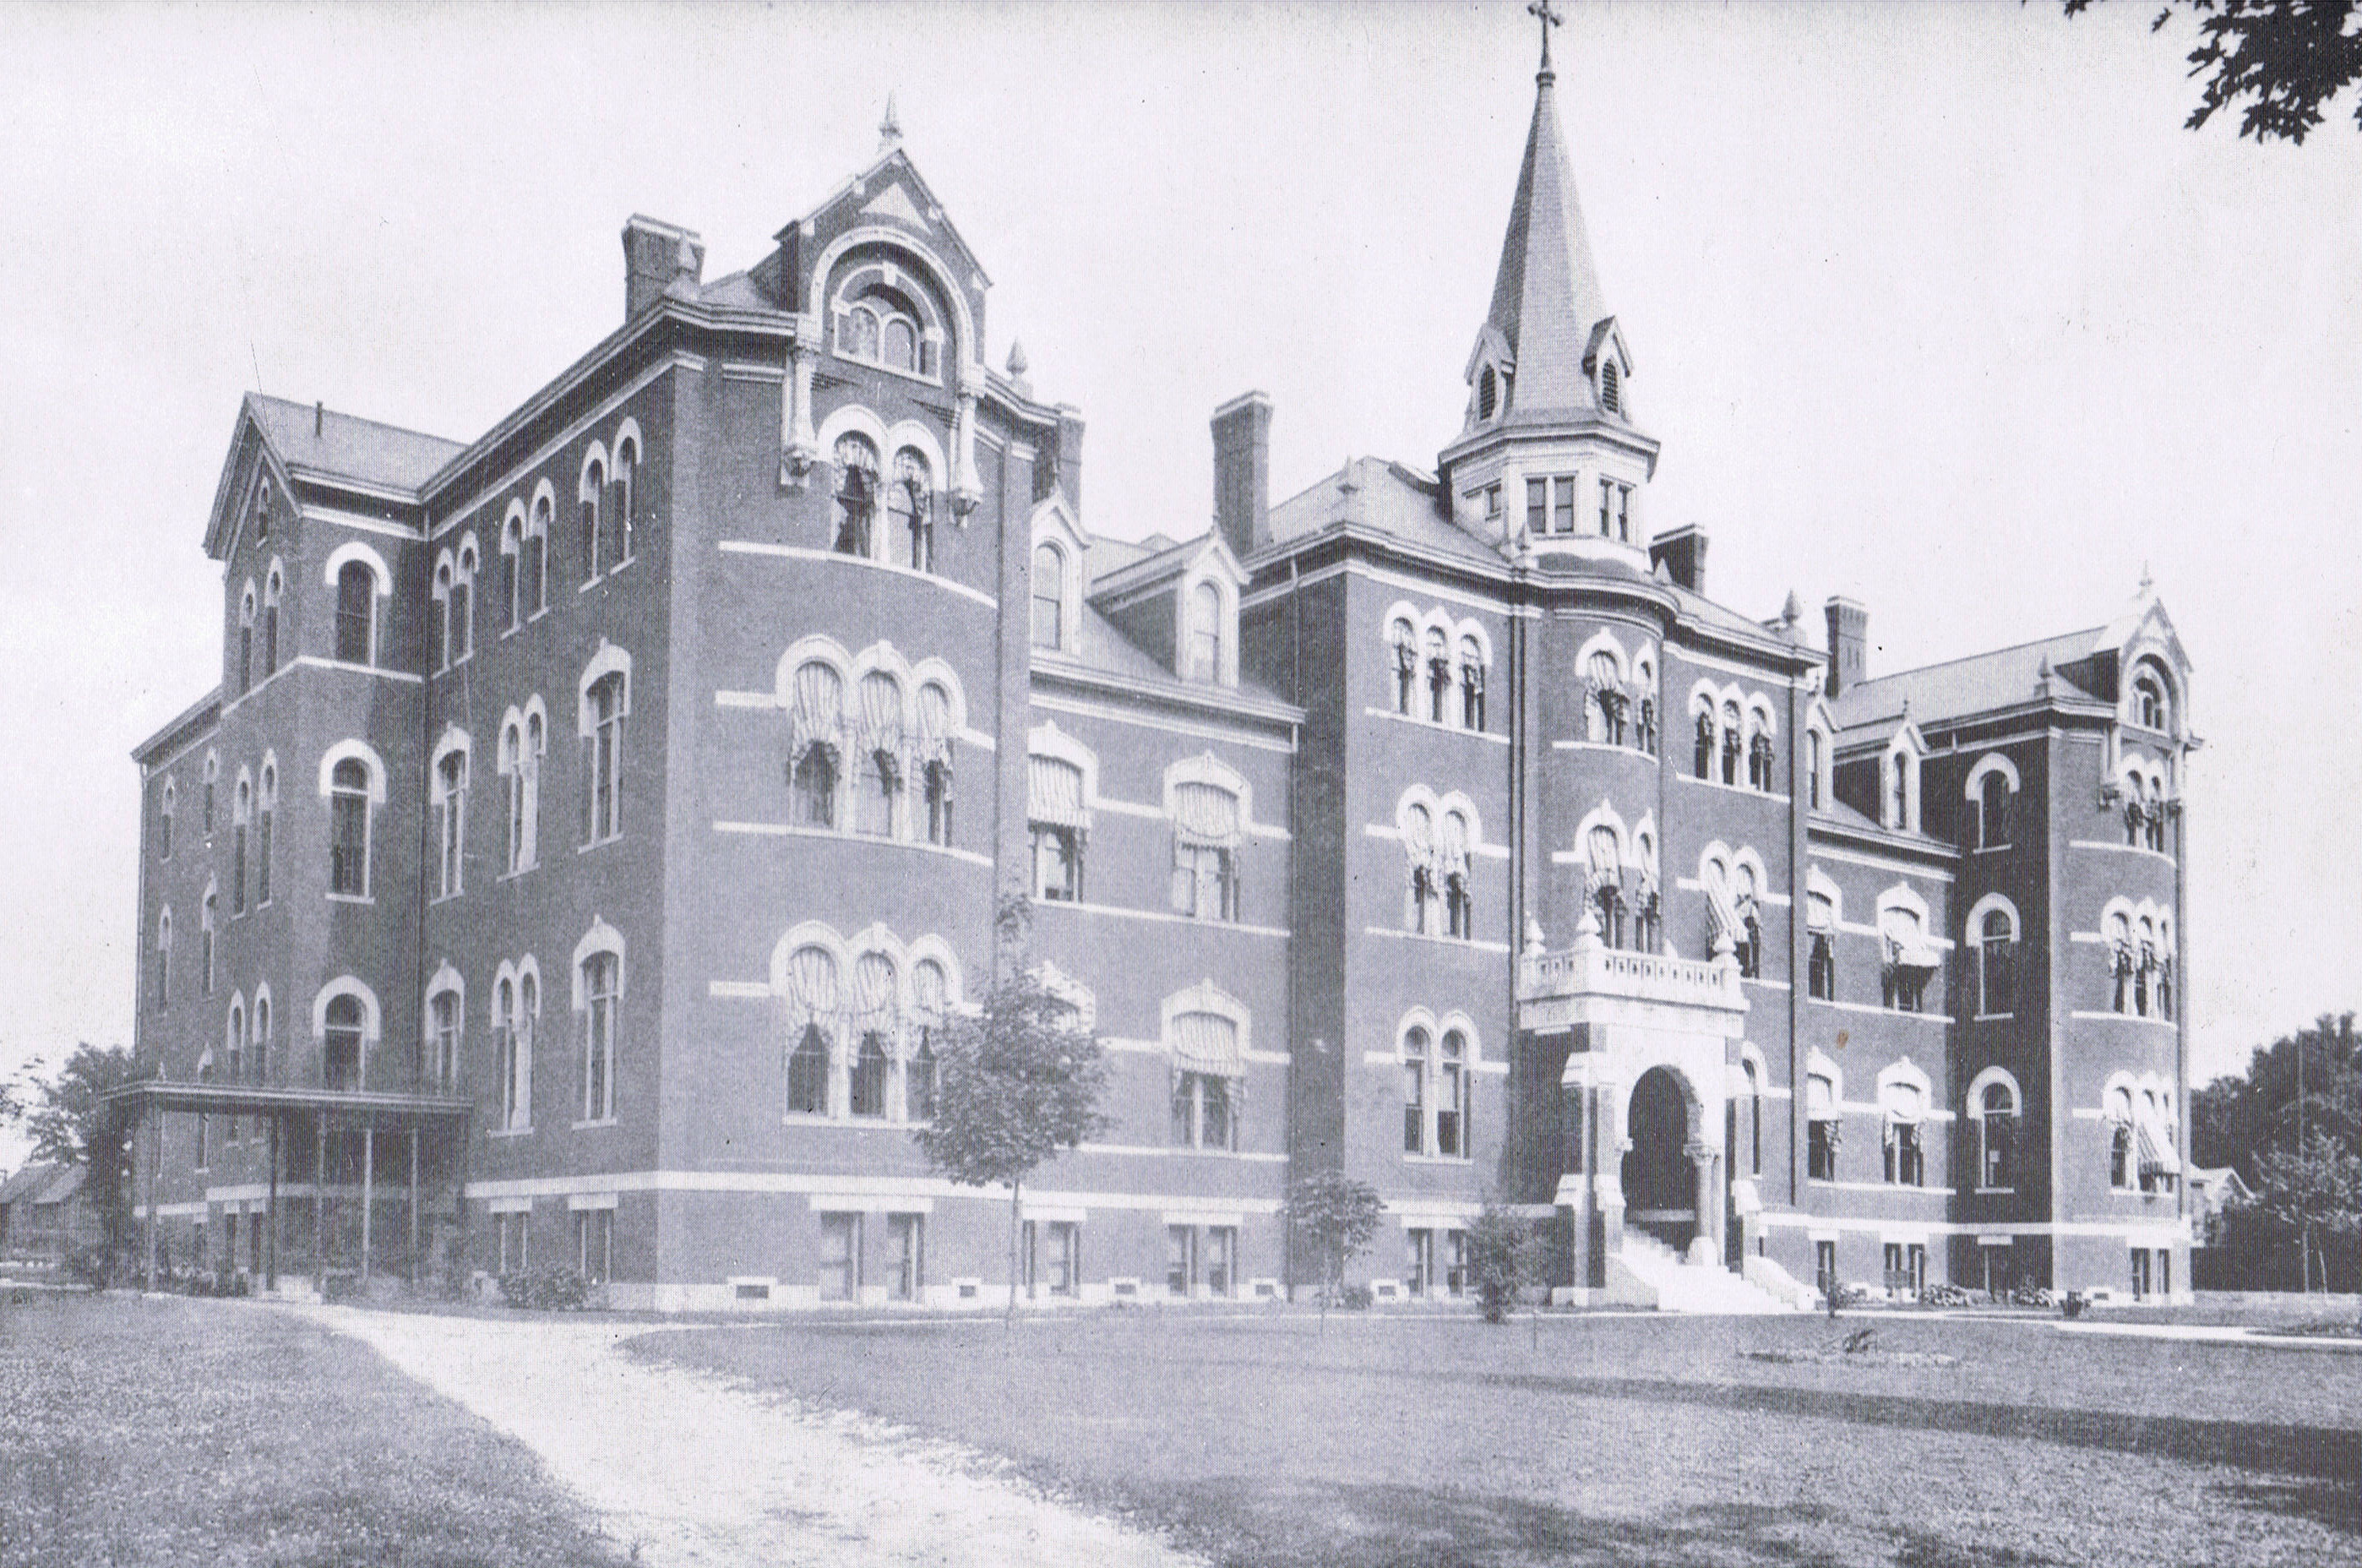 Old St. Mary's Hospital